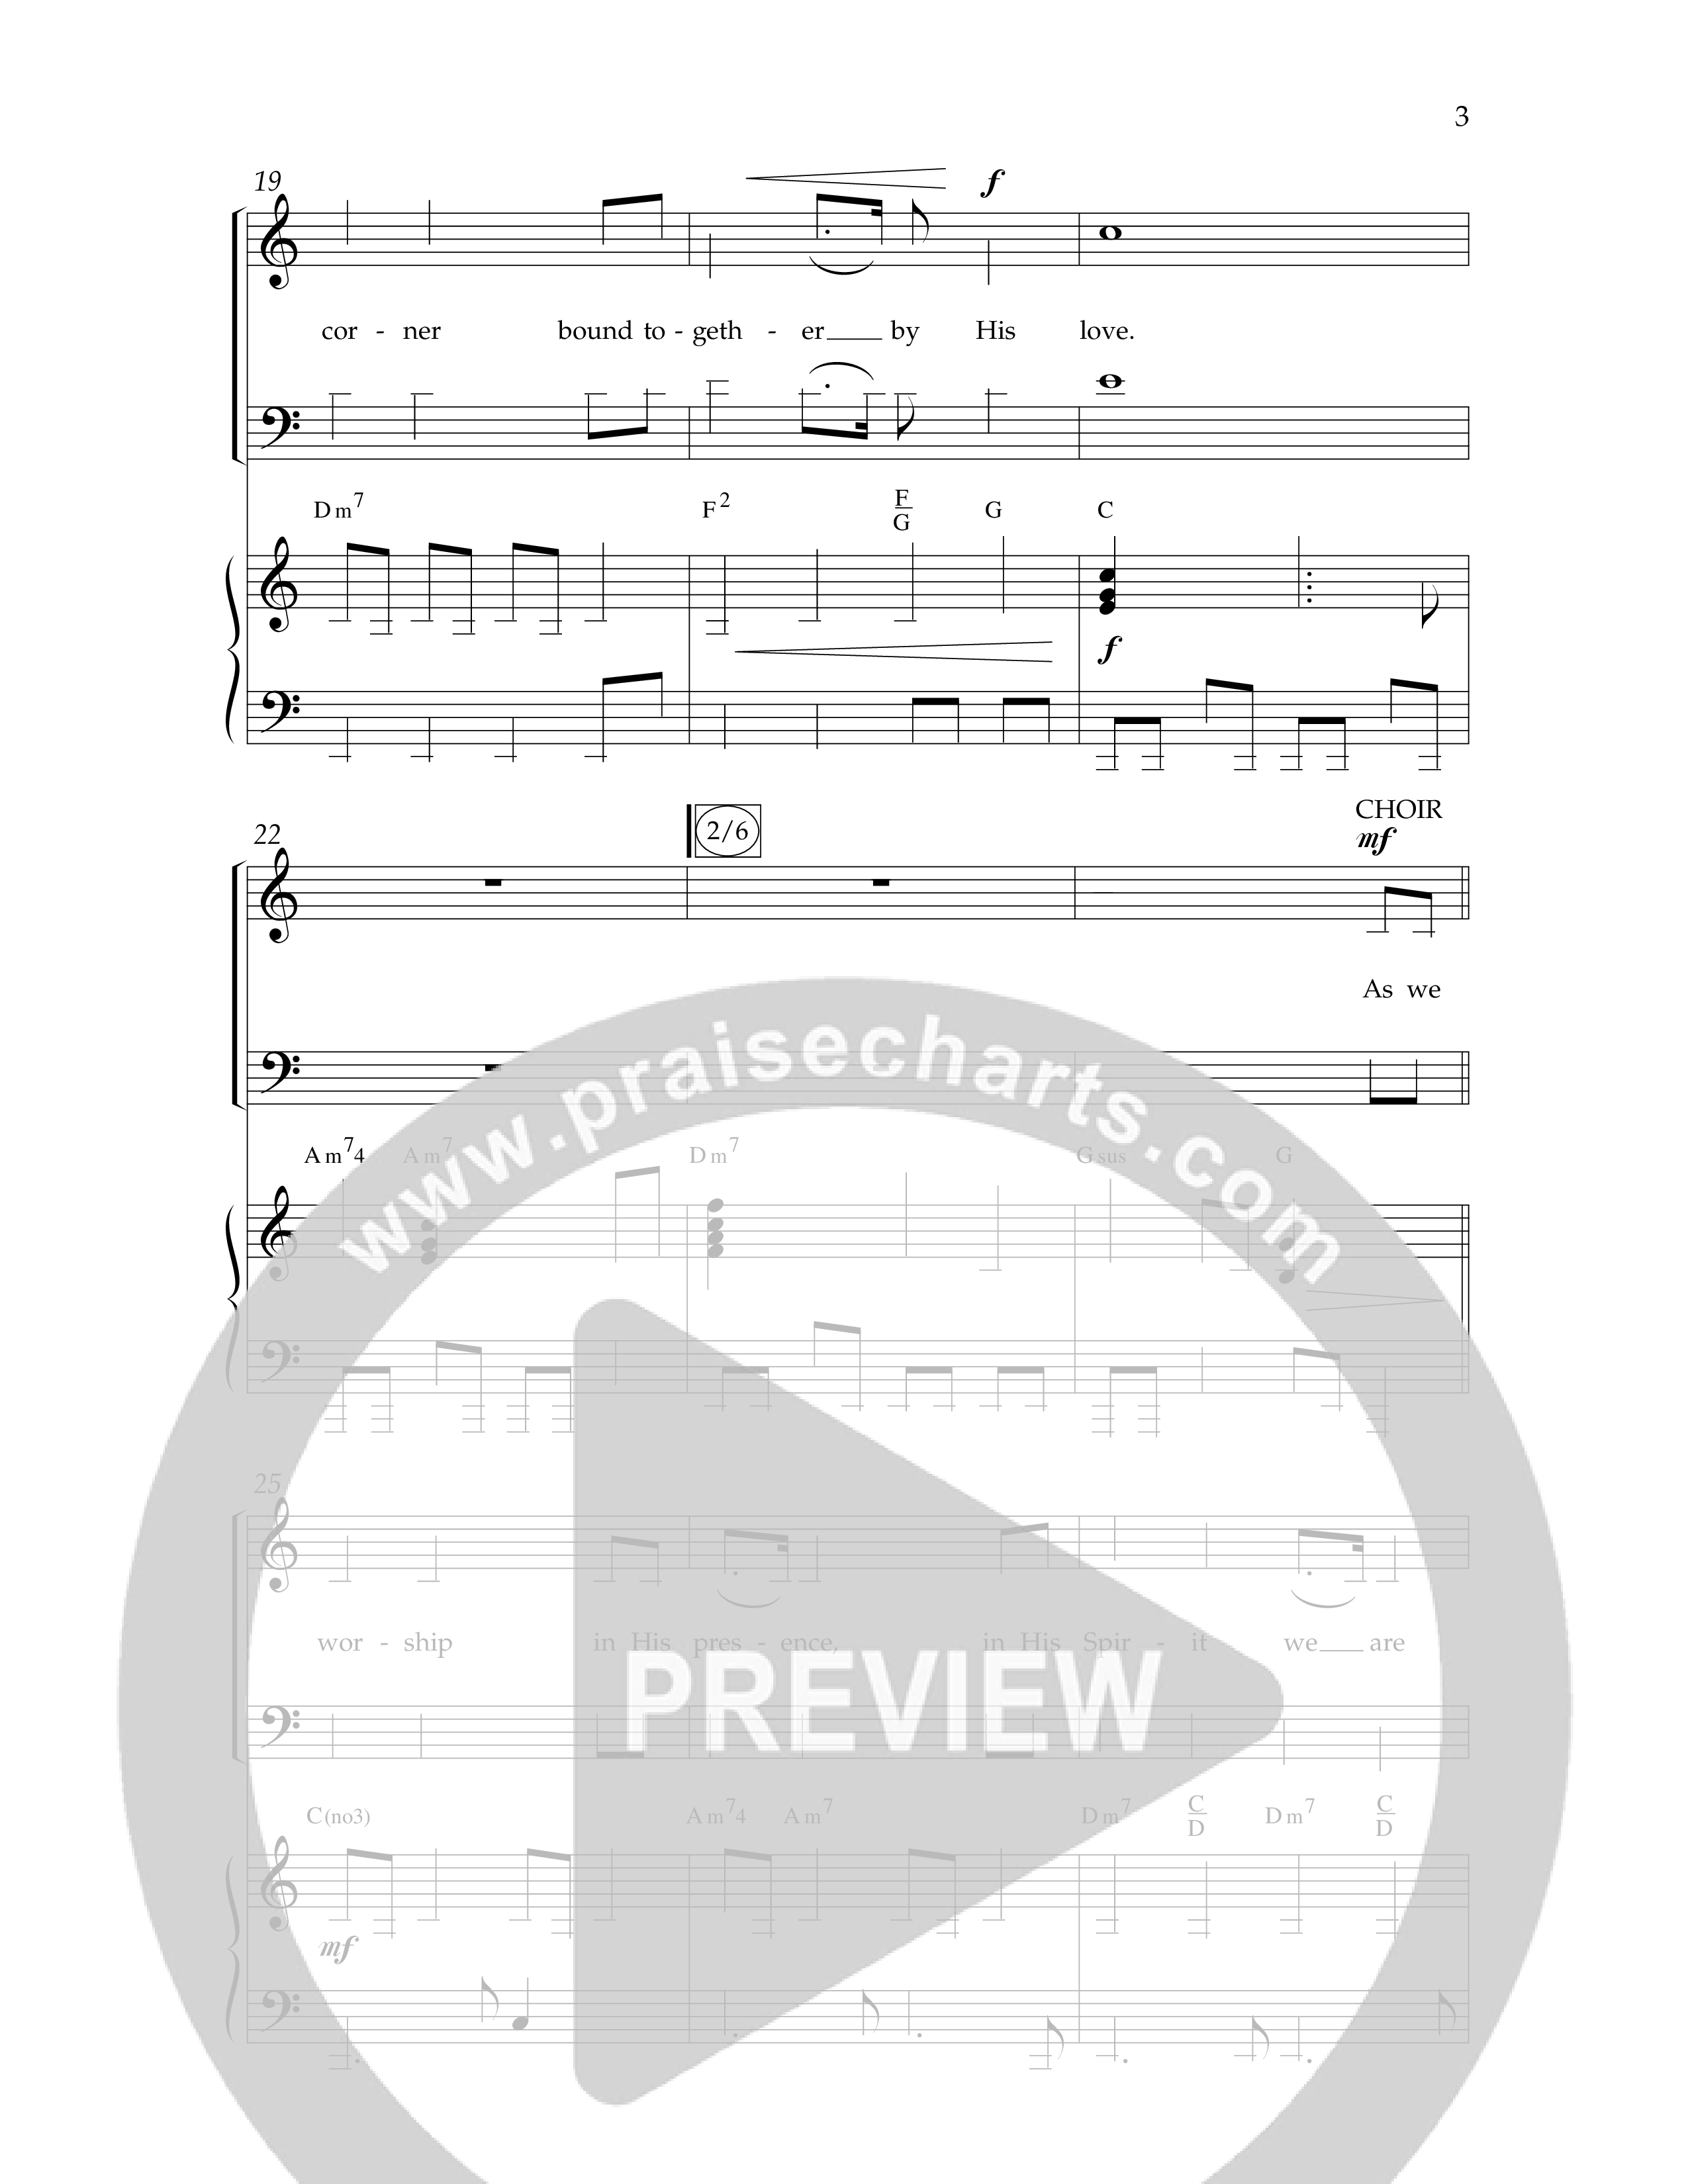 We The Church (Choral Anthem SATB) Anthem (SATB/Piano) (Lifeway Choral / Arr. Dave Williamson)